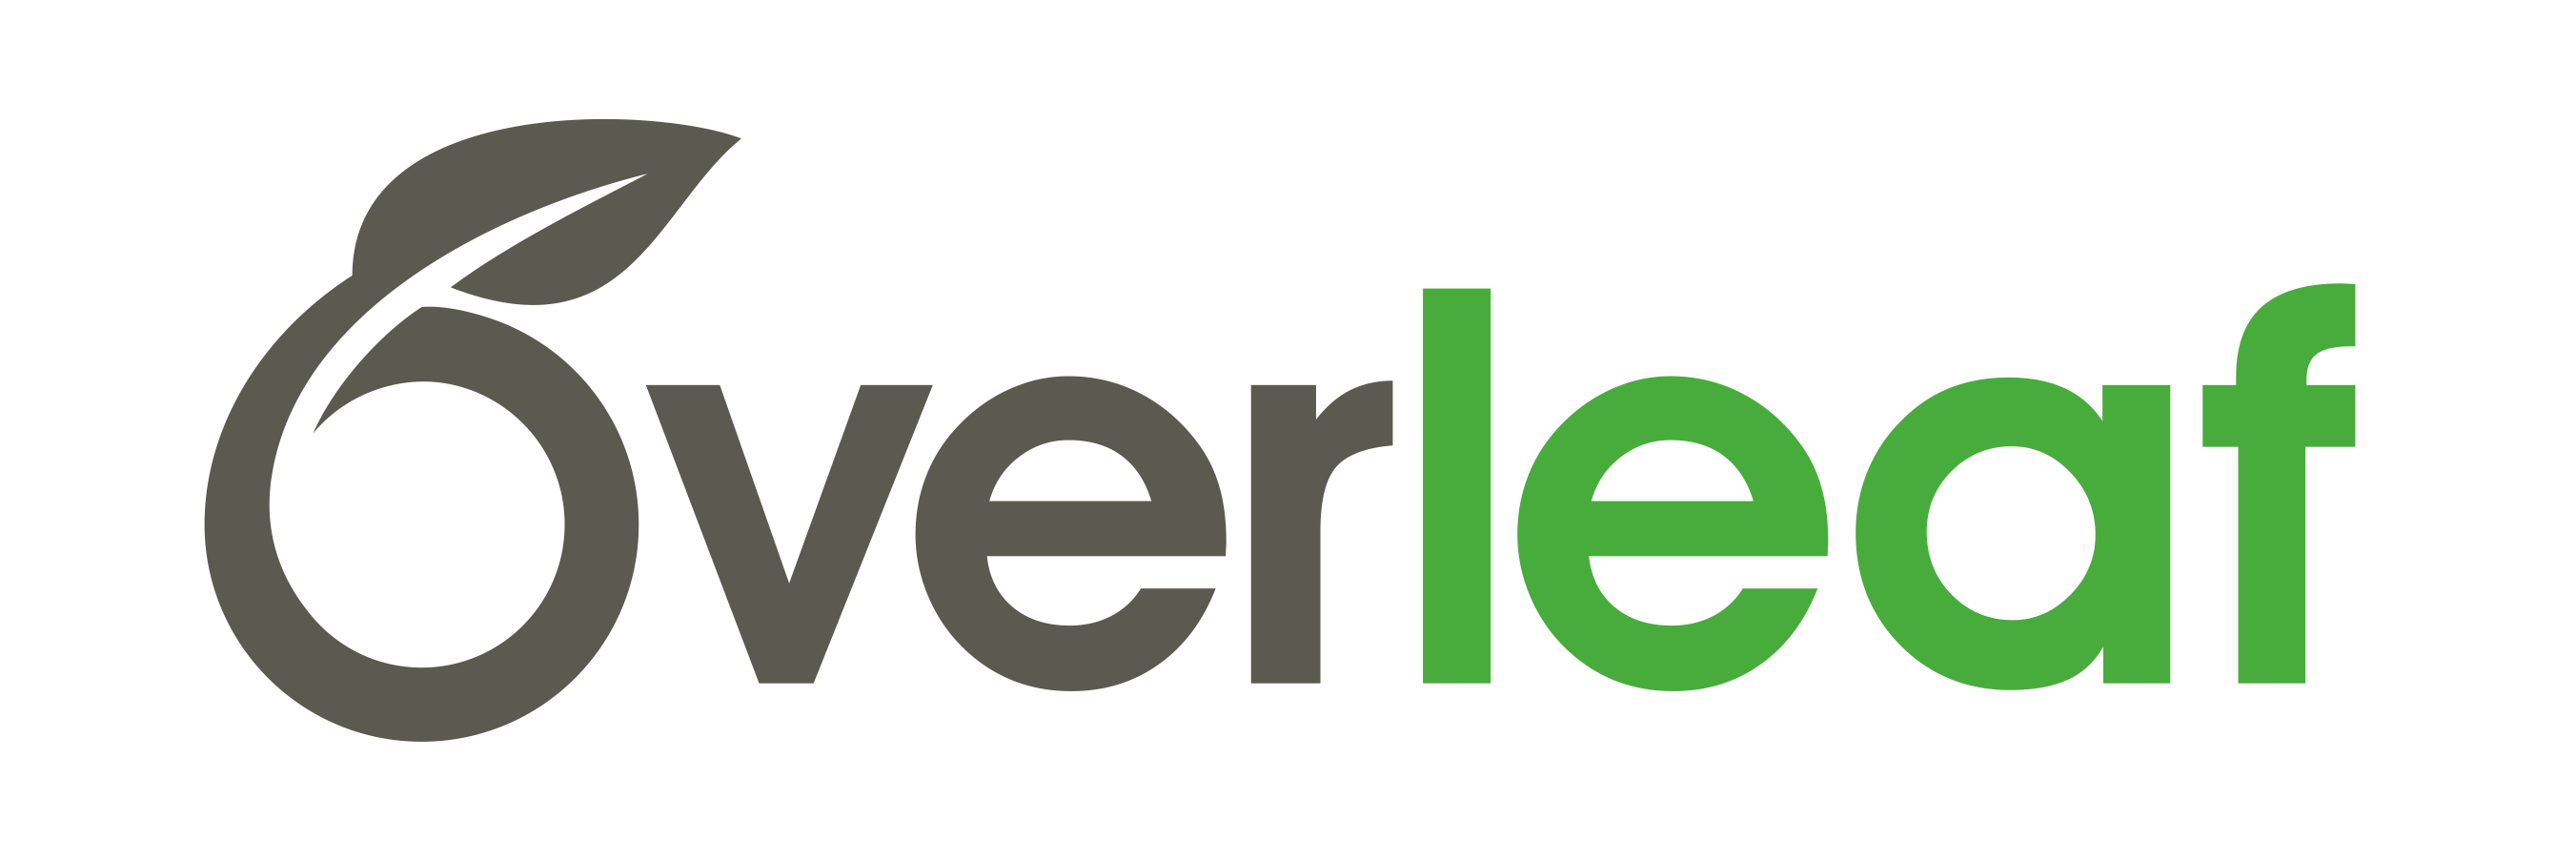 Overleaf Logo